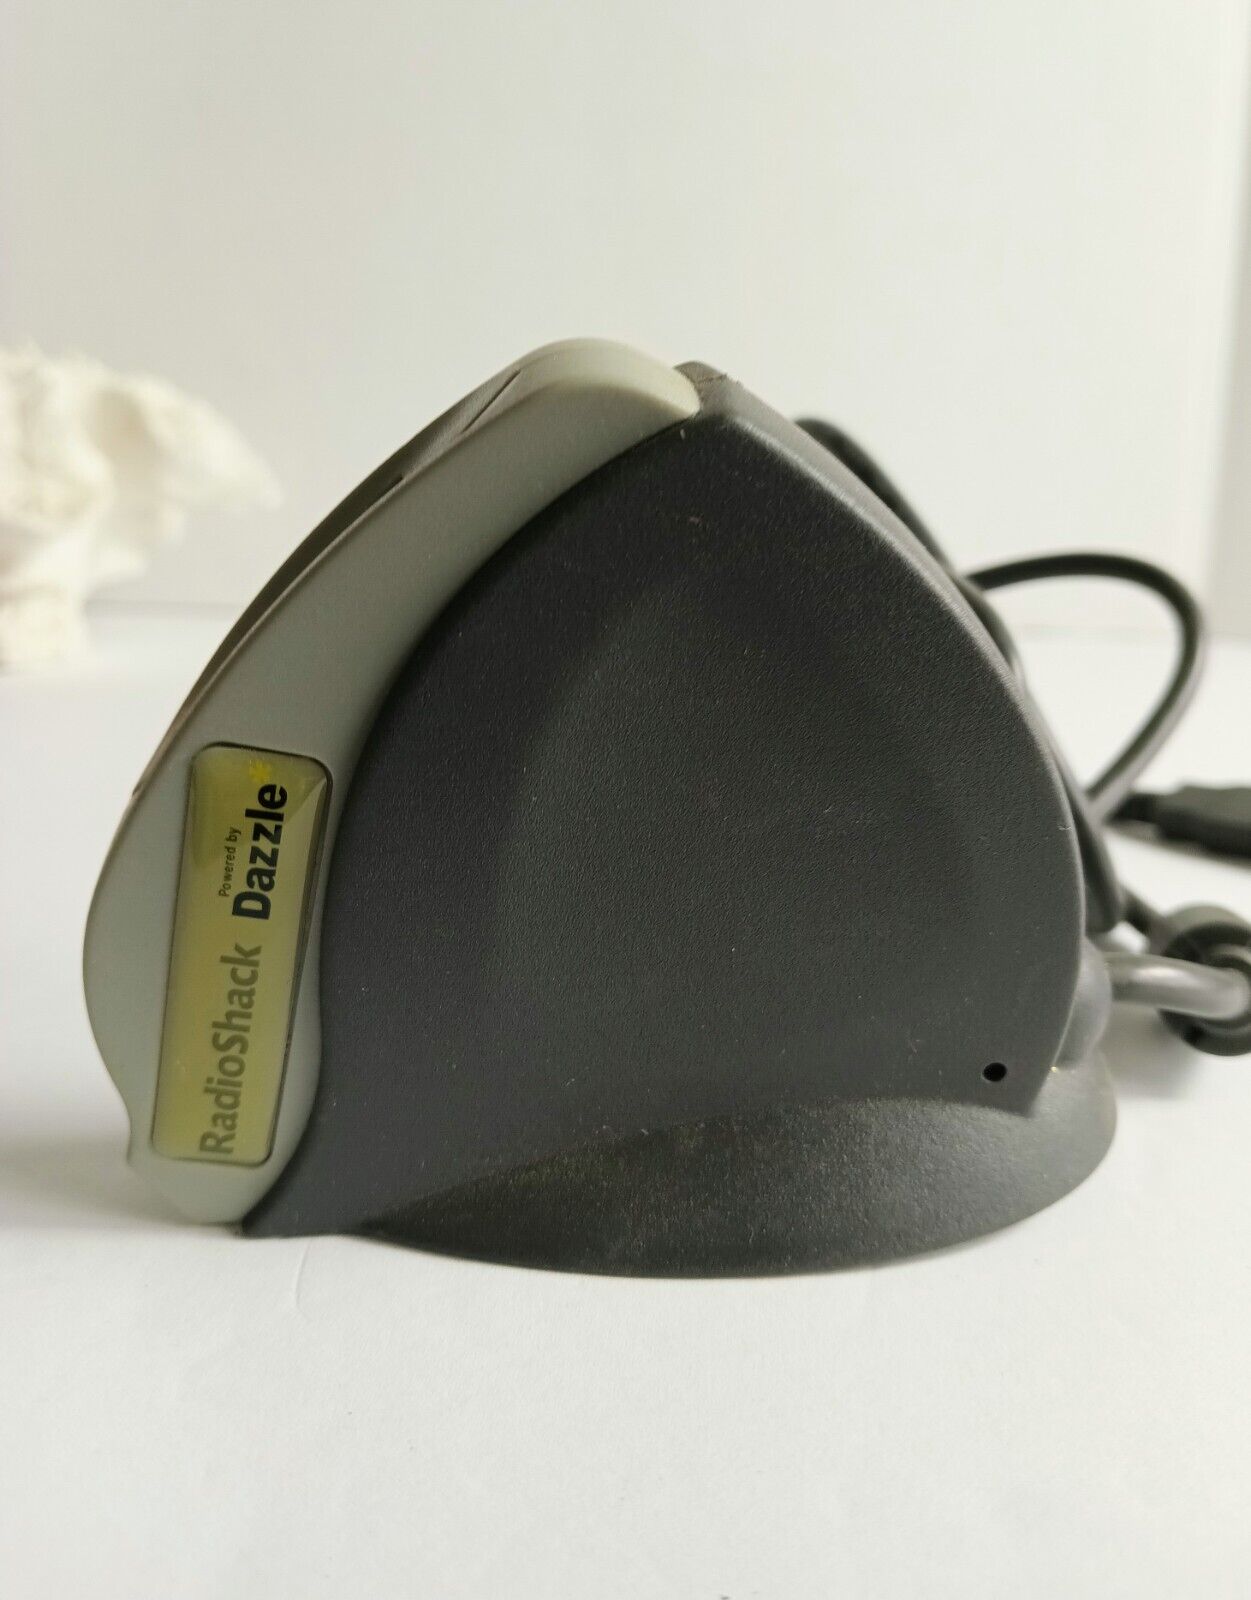 Radio Shack Dazzle Hi Speed USB Memory Card Reader Writer Cat No 16-3854